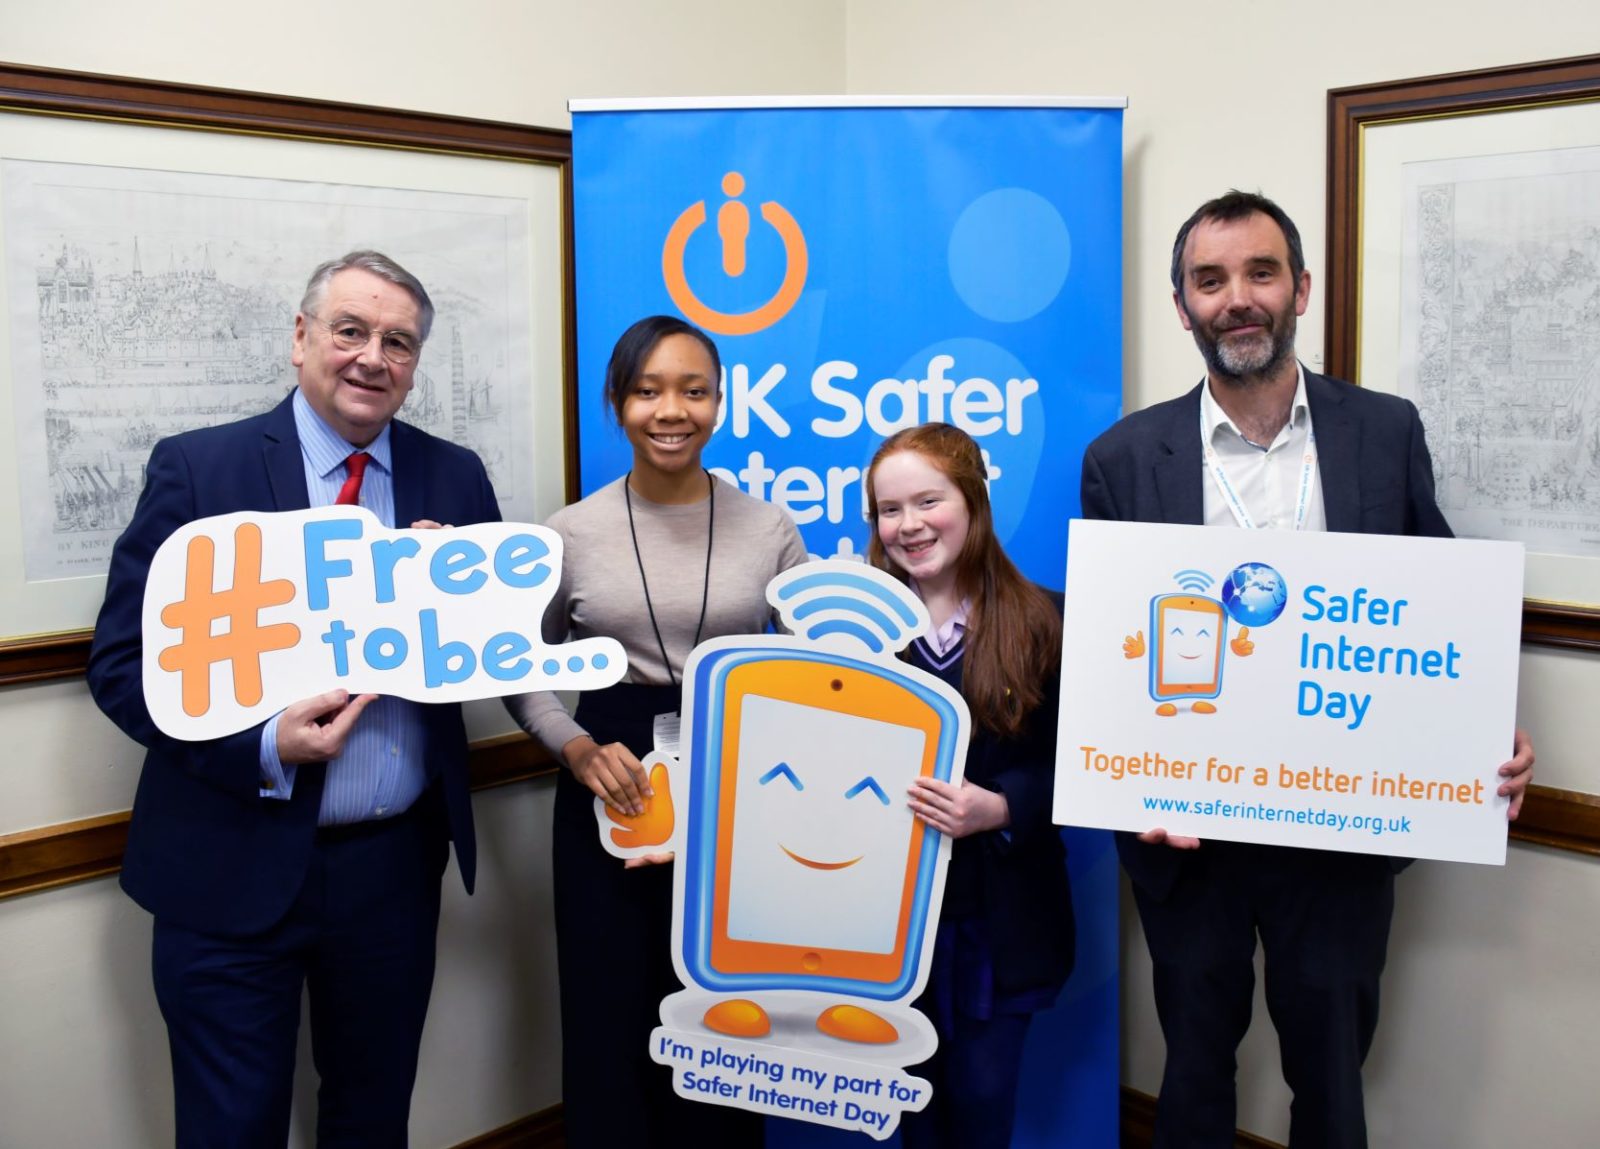 Alan Campbell MP at Safer Internet Day